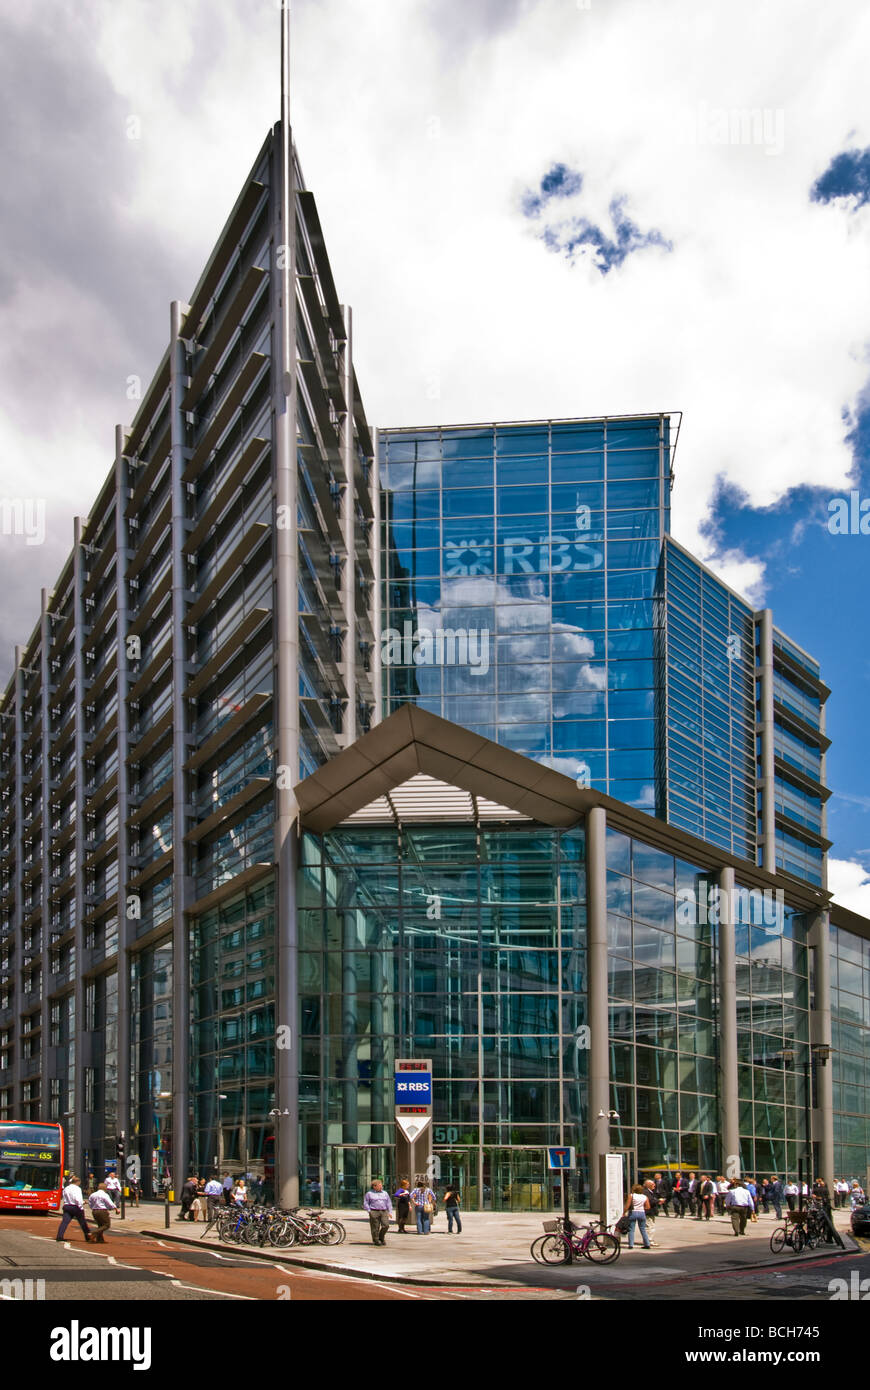 Royal bank scotland rbs headquarters -Fotos und -Bildmaterial in hoher  Auflösung – Alamy